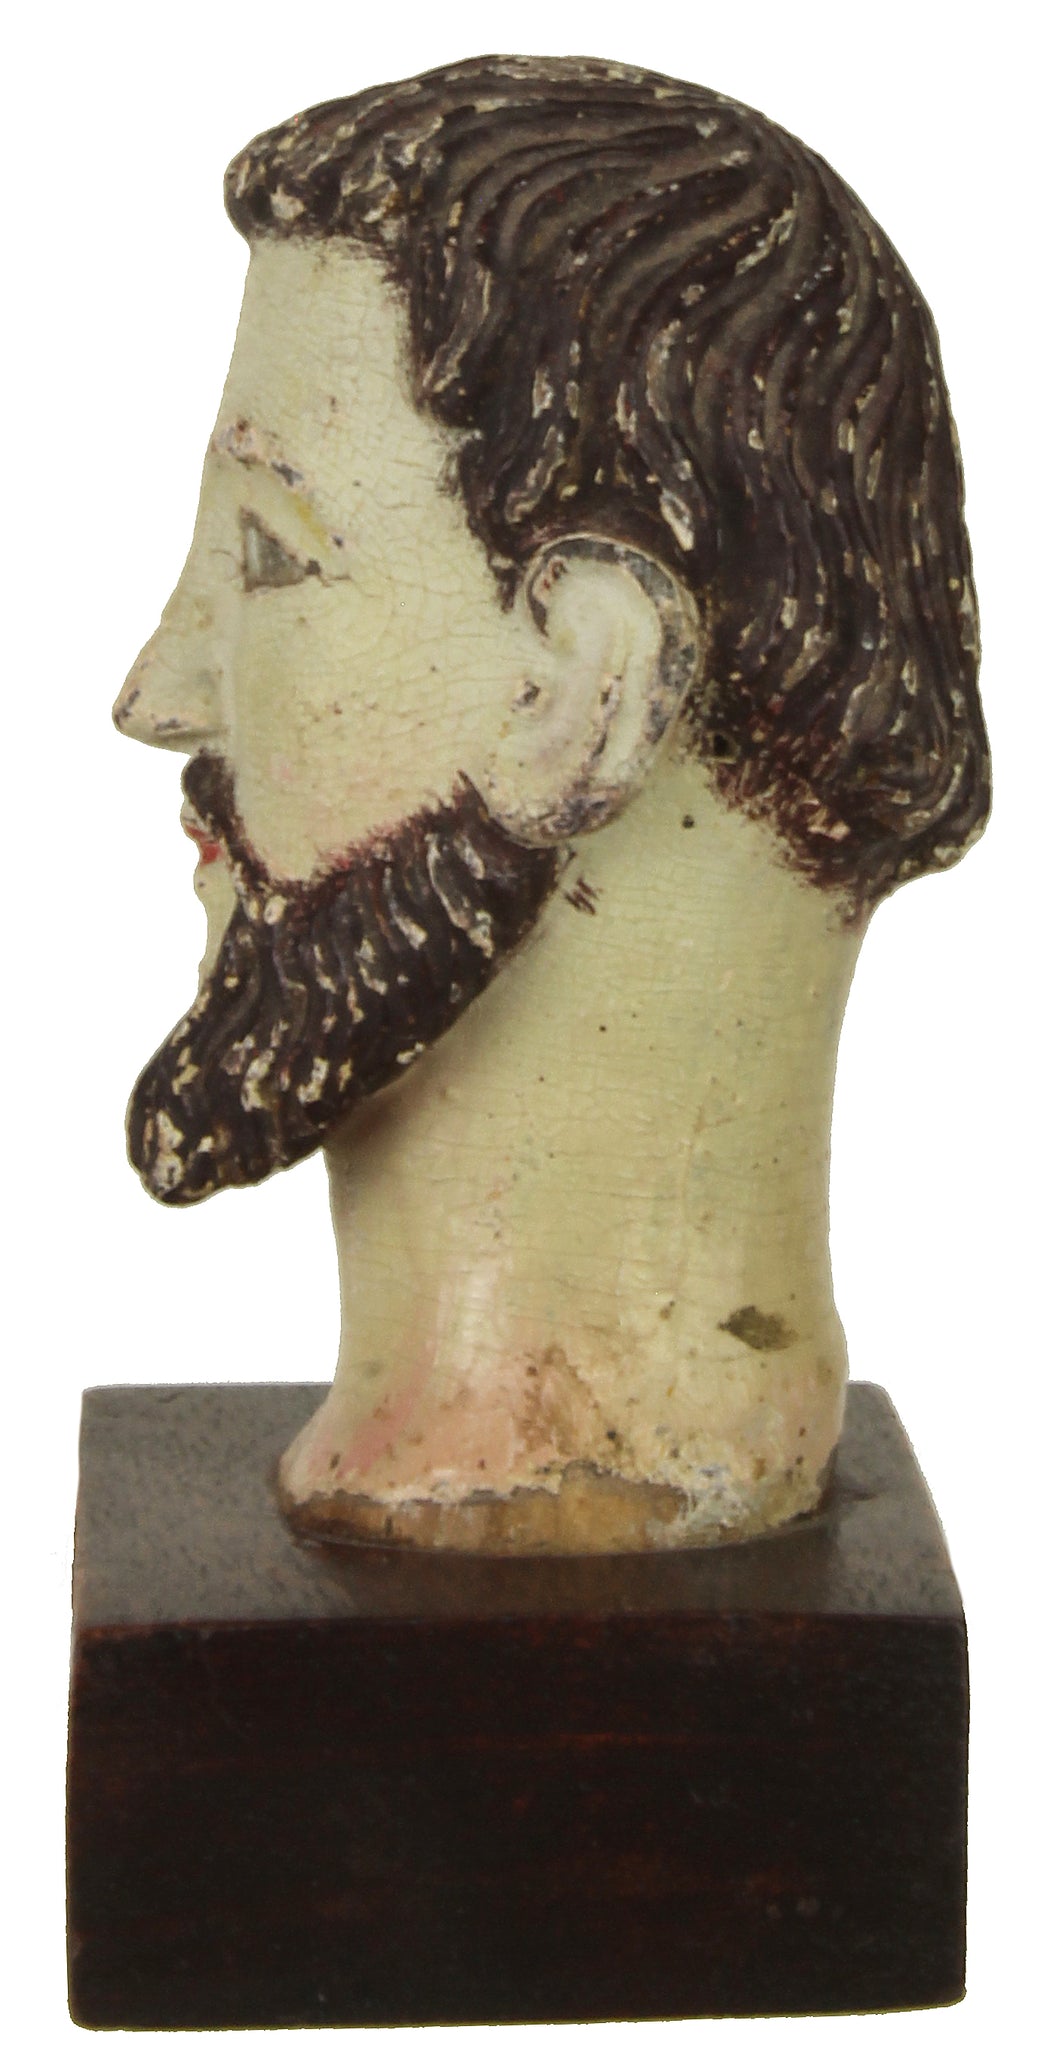 Antique Vietnamese Saint Figure Head - Niger Bend